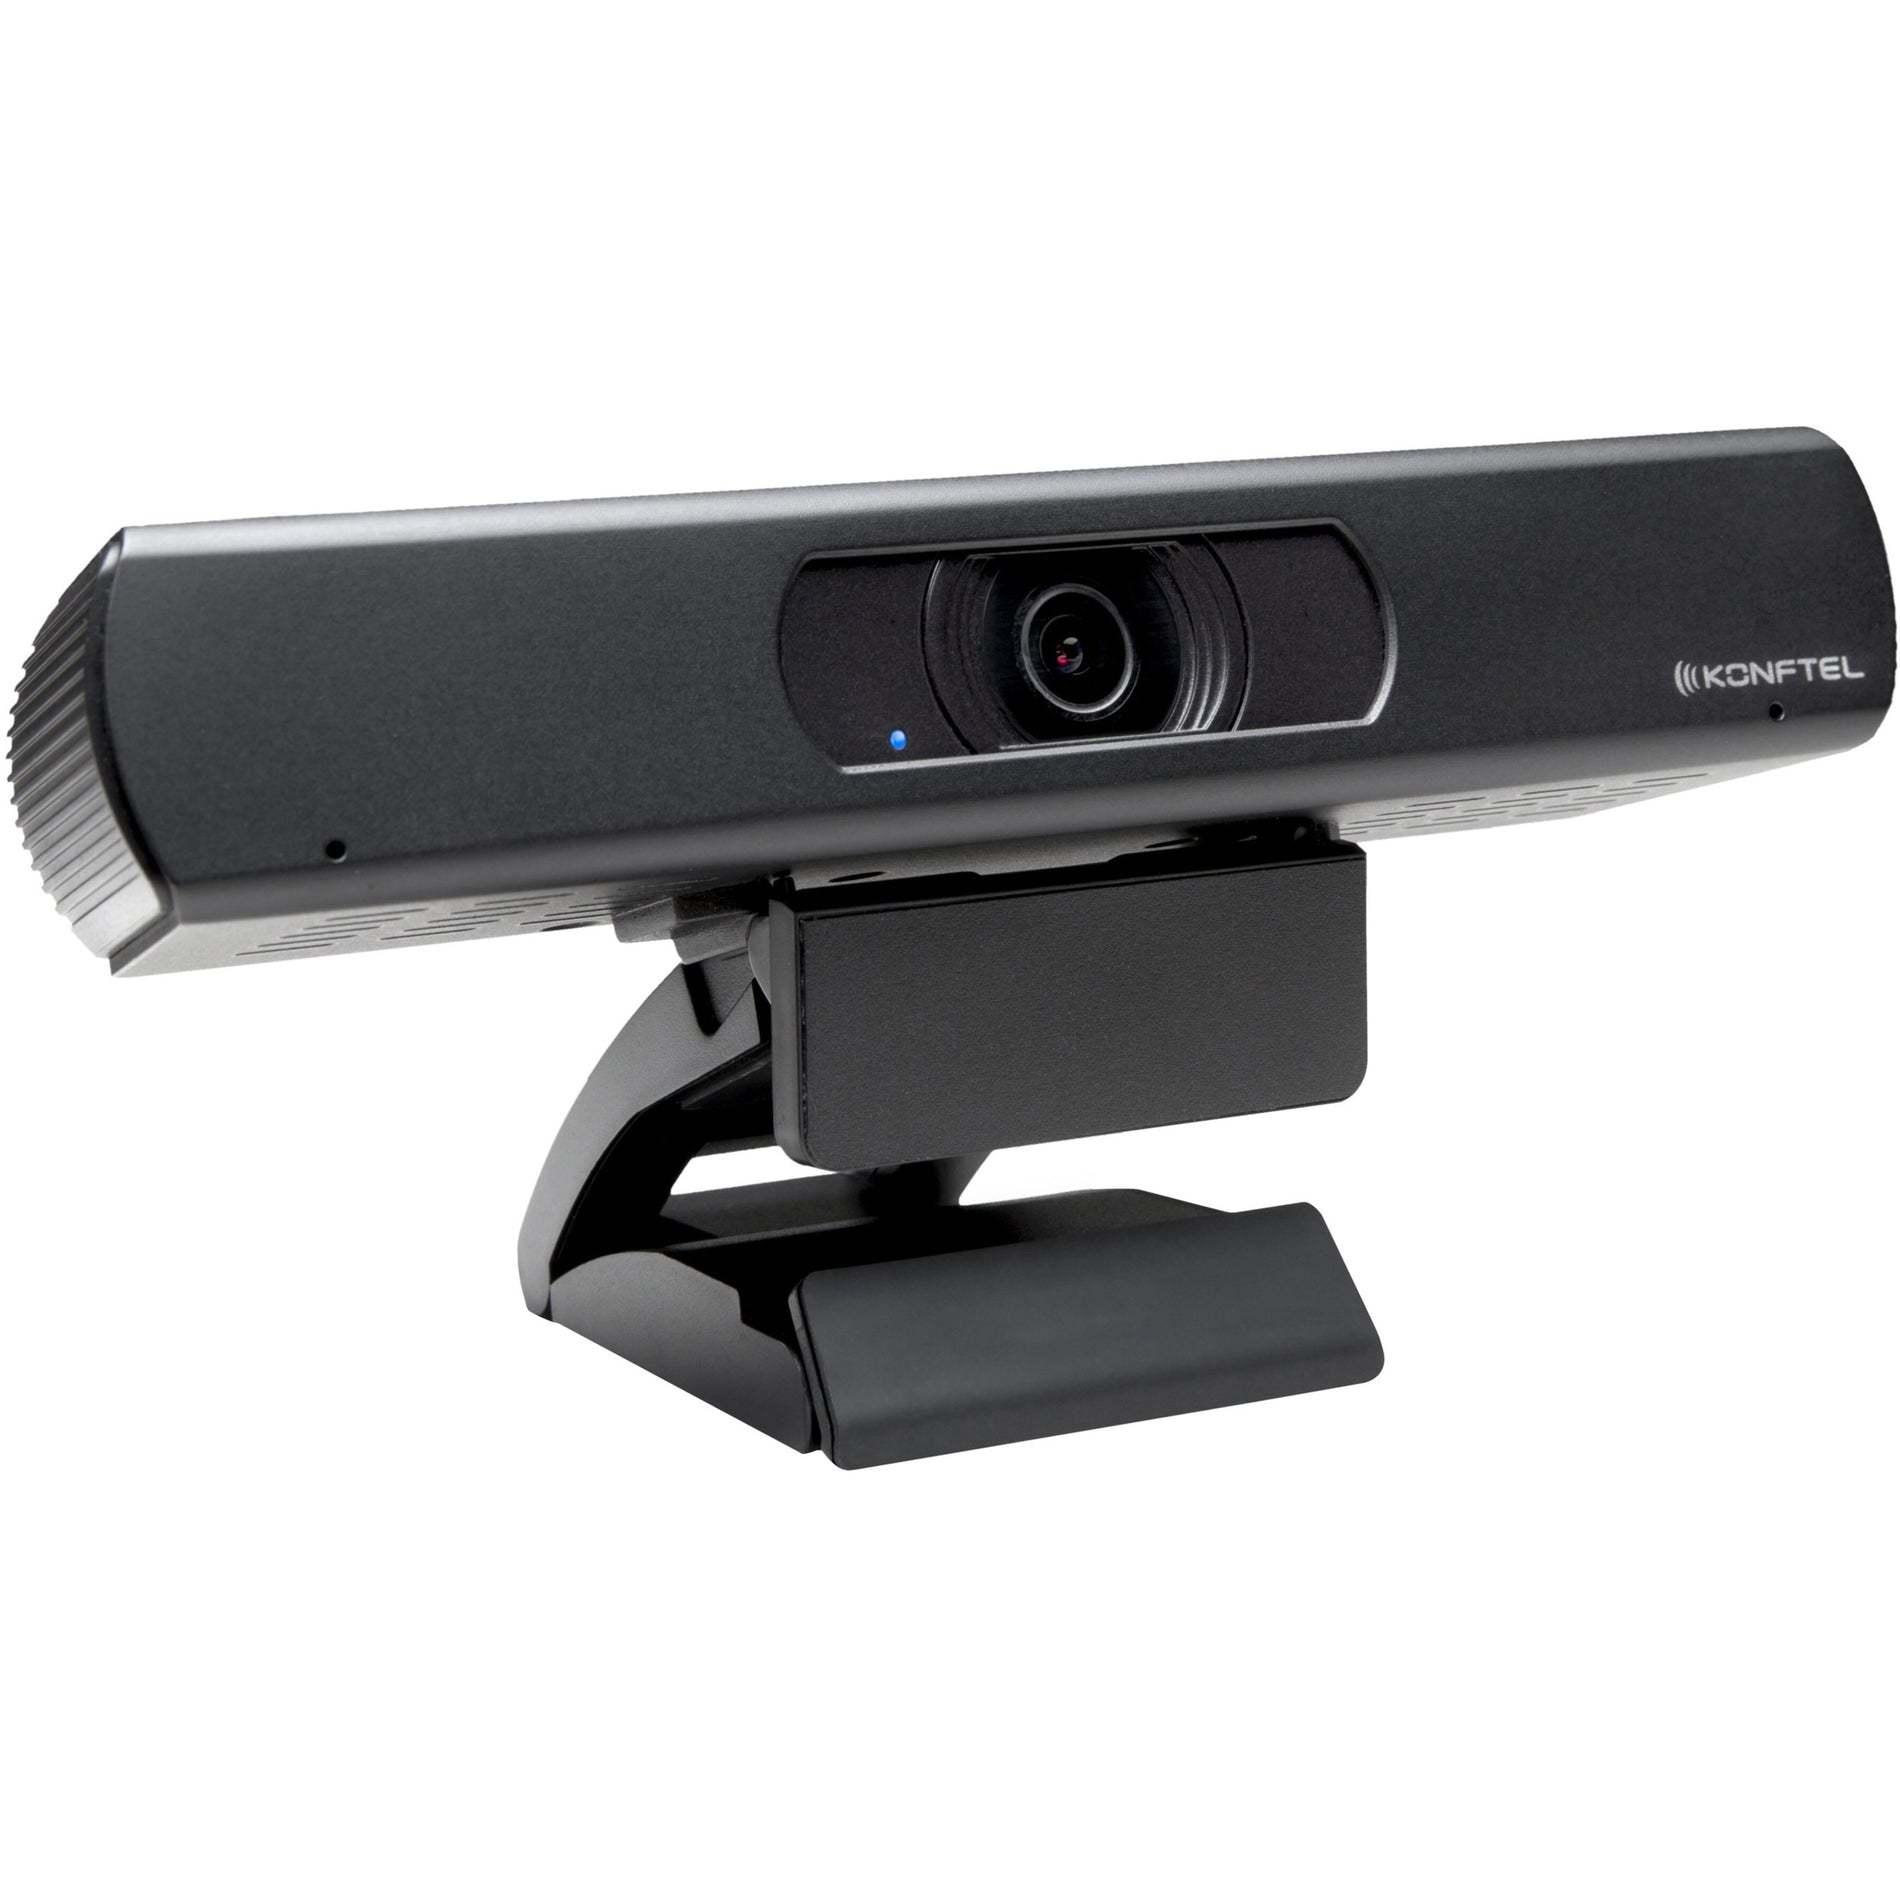 Konftel 931201001 Cam20 Video Conferencing Camera, 4K Ultra HD, 123o Field of View, USB, Remote Control